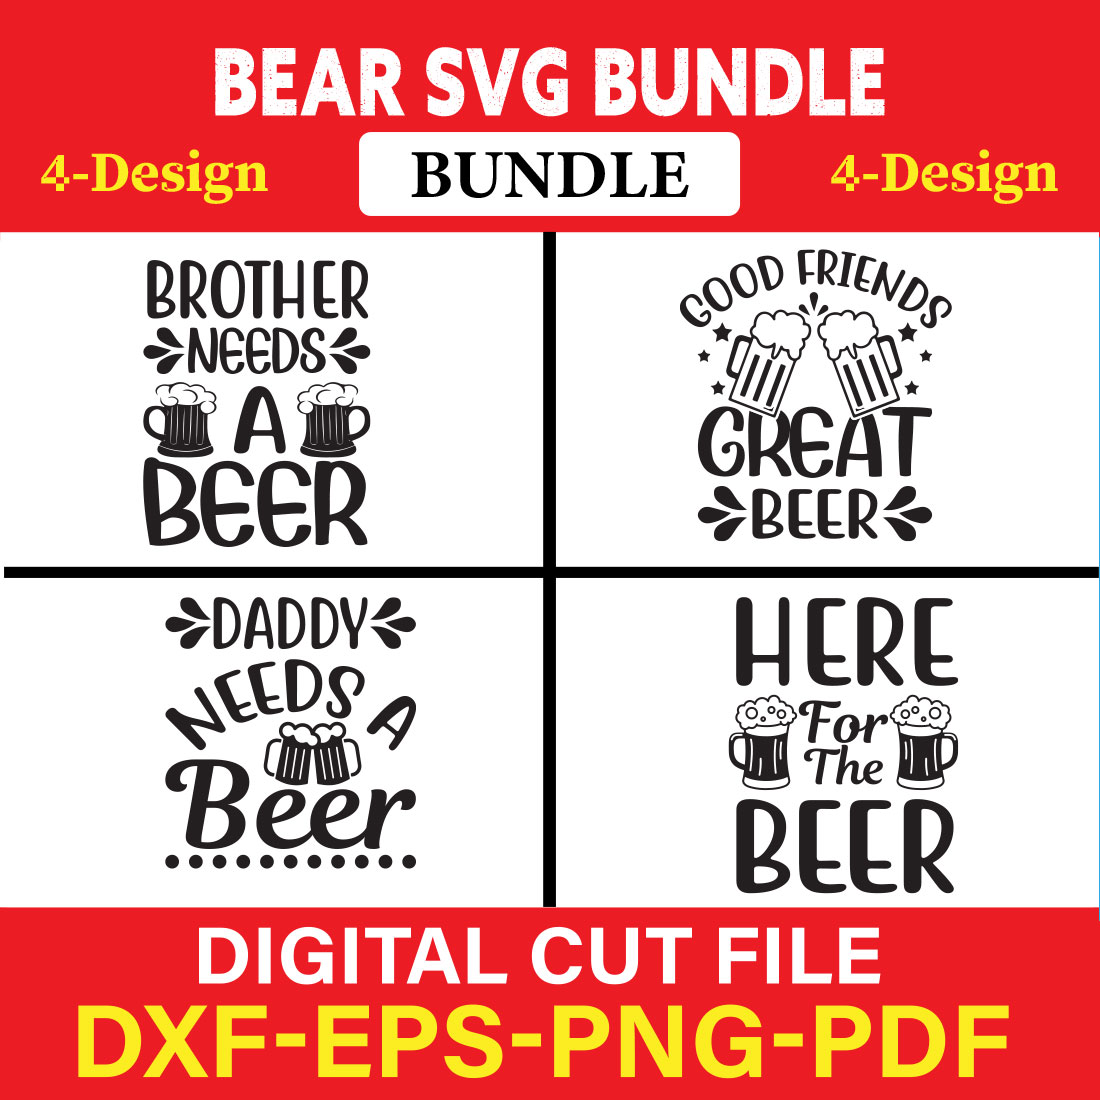 Bear T-shirt Design Bundle Vol-2 cover image.